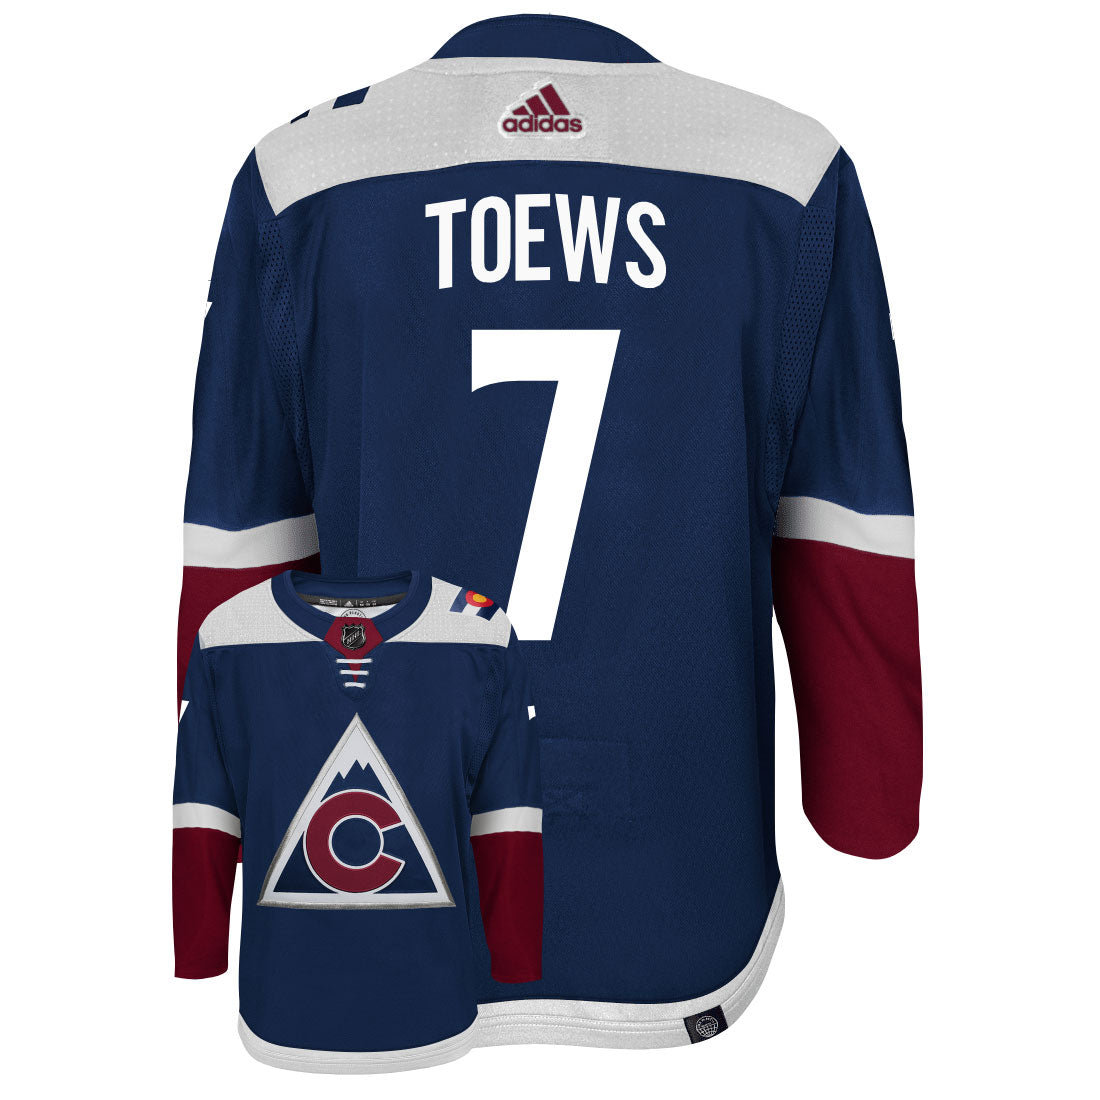 Devon Toews Colorado Avalanche Adidas Primegreen Authentic Third Alternate NHL Hockey Jersey - Back/Front View